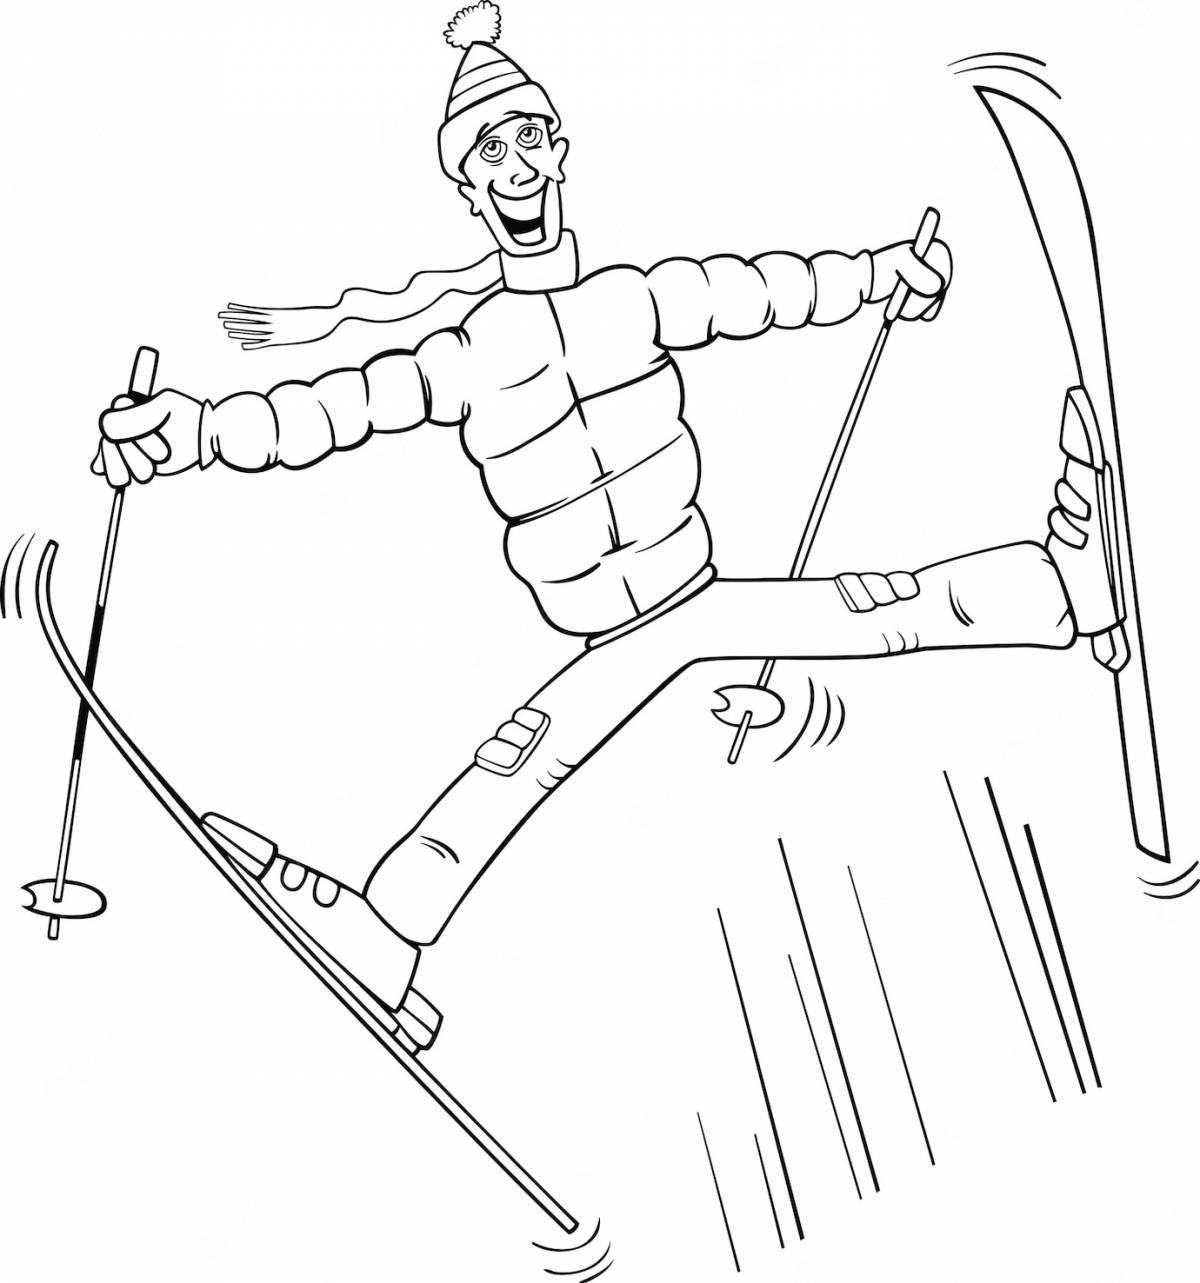 Refreshing skiing coloring page